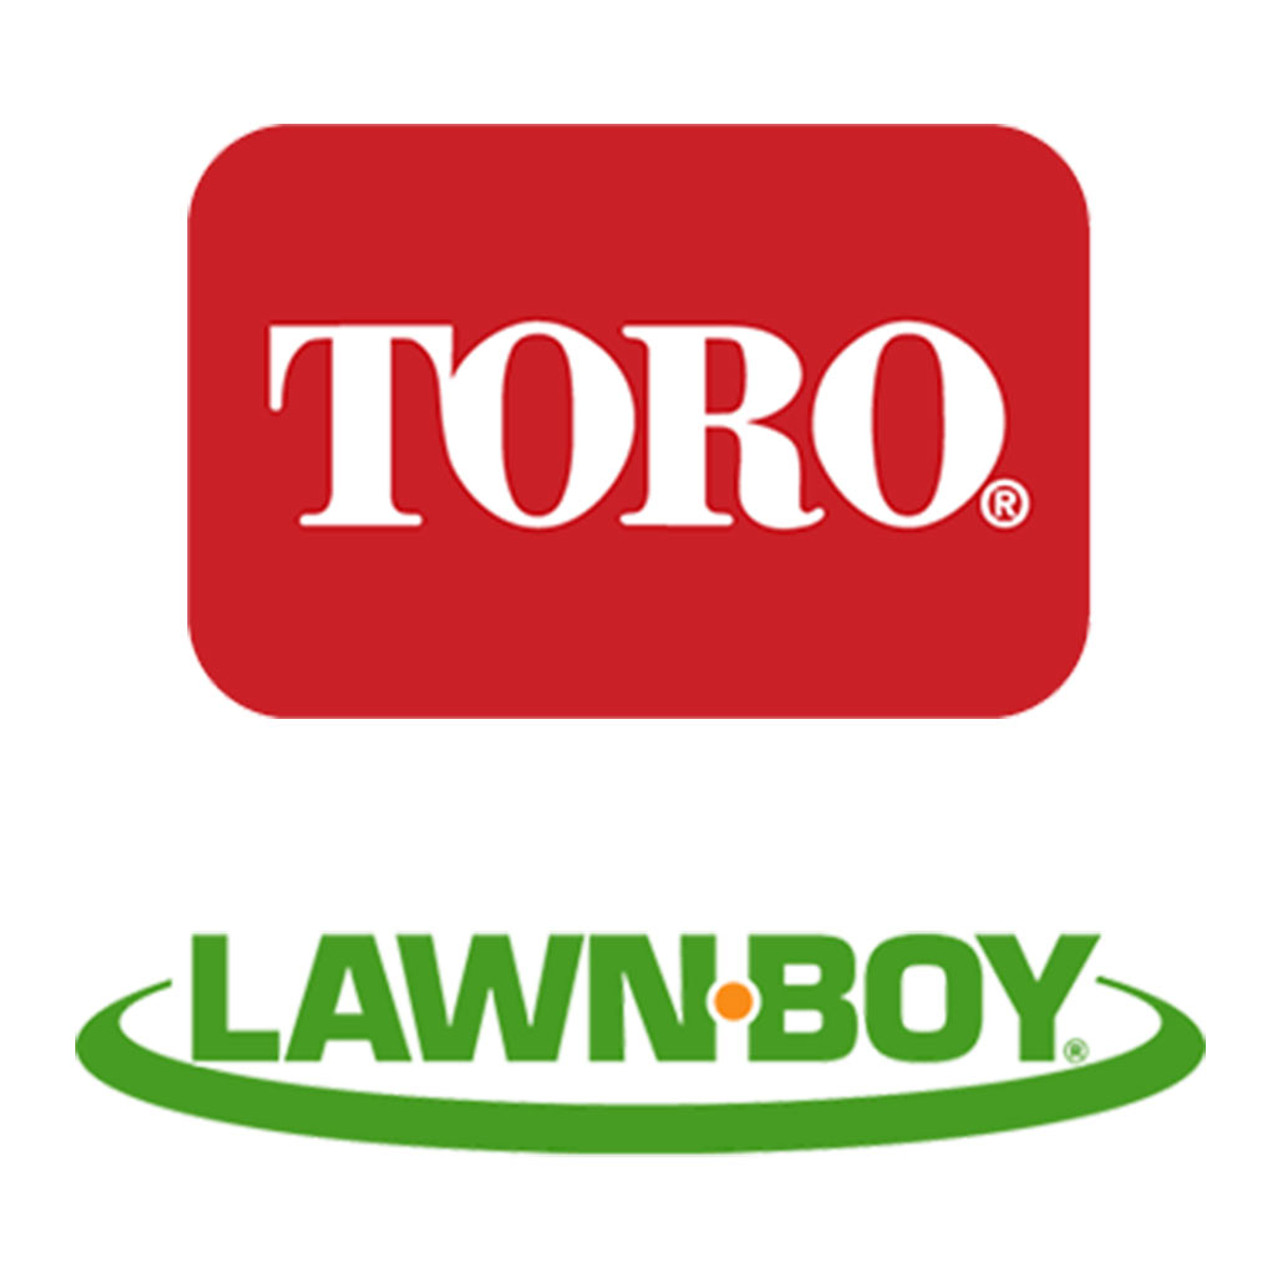 Toro Lawn-Boy 86-9671 Guide-Rope